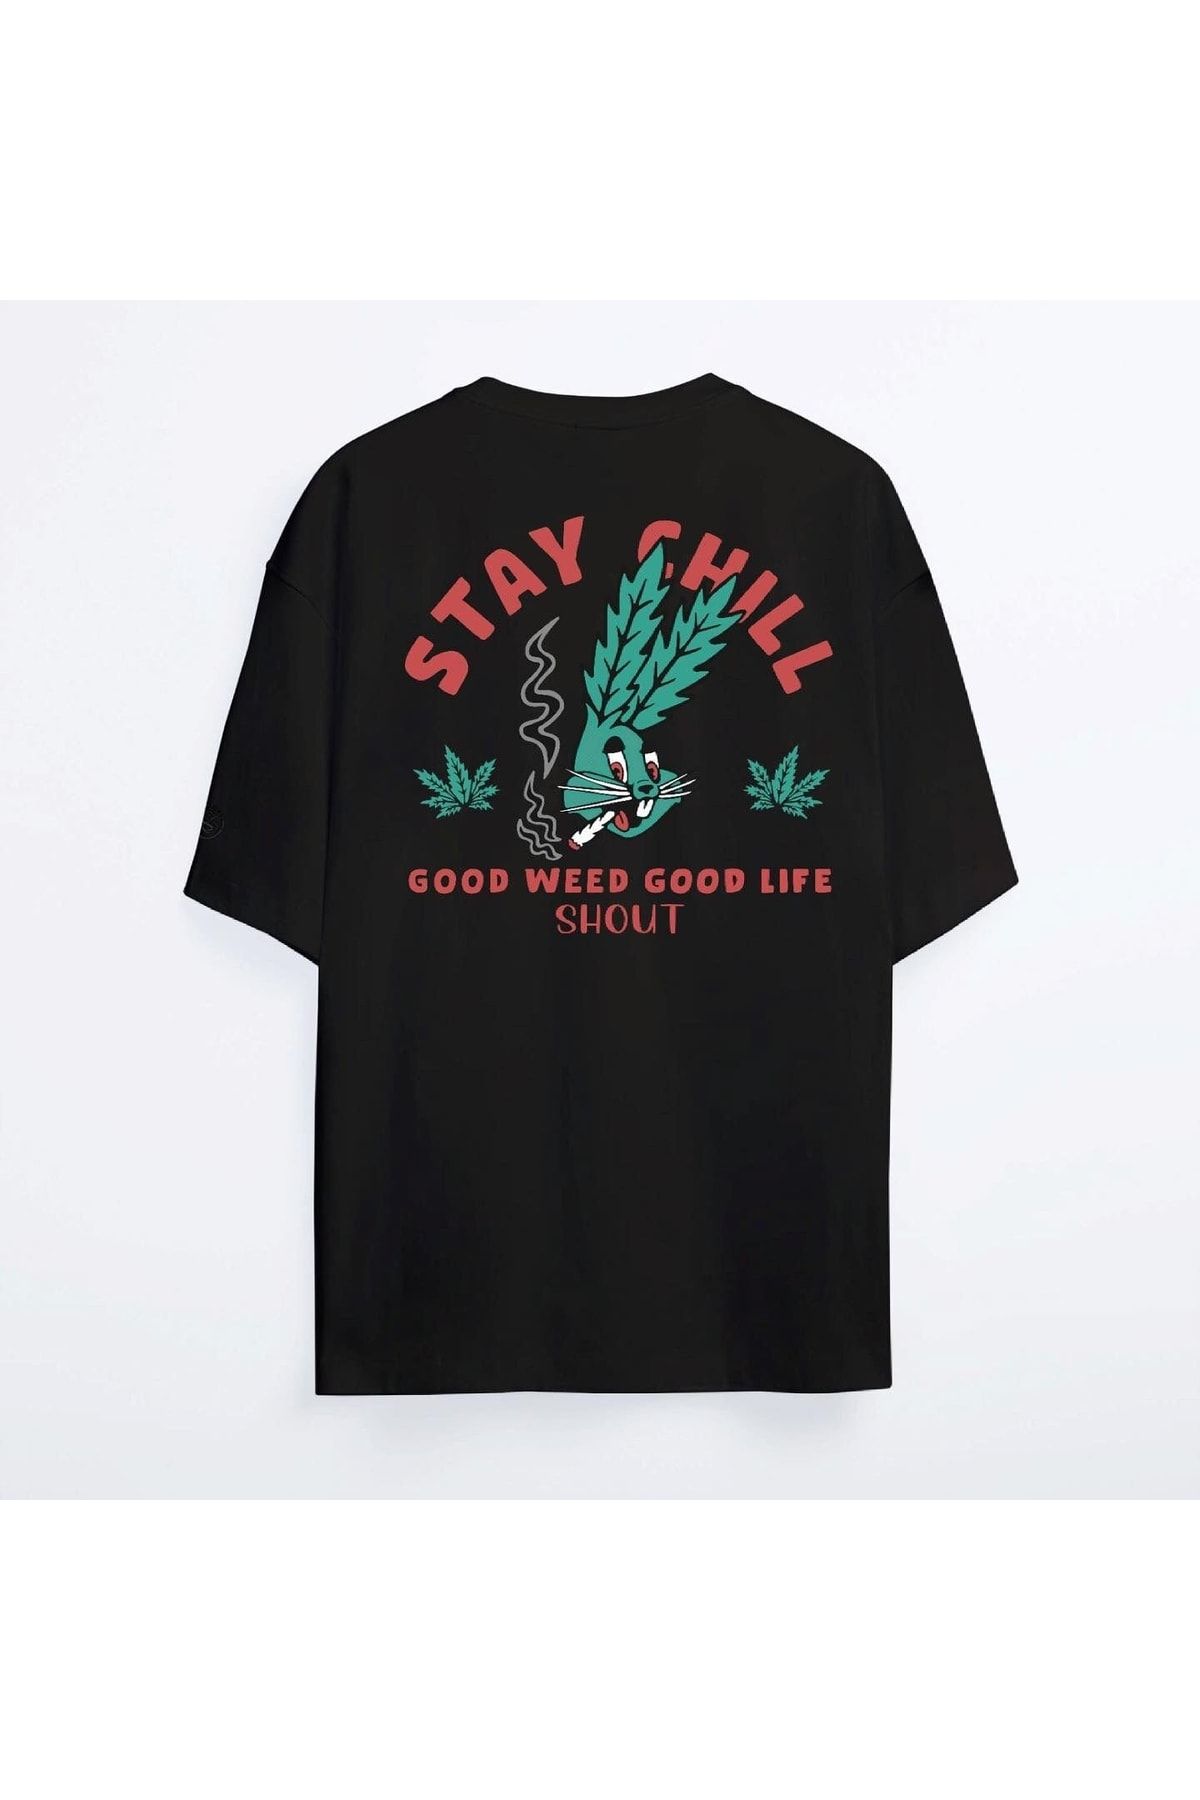 Shout Oversize Black Good Weed Good Life Oldschool Unisex T-shirt